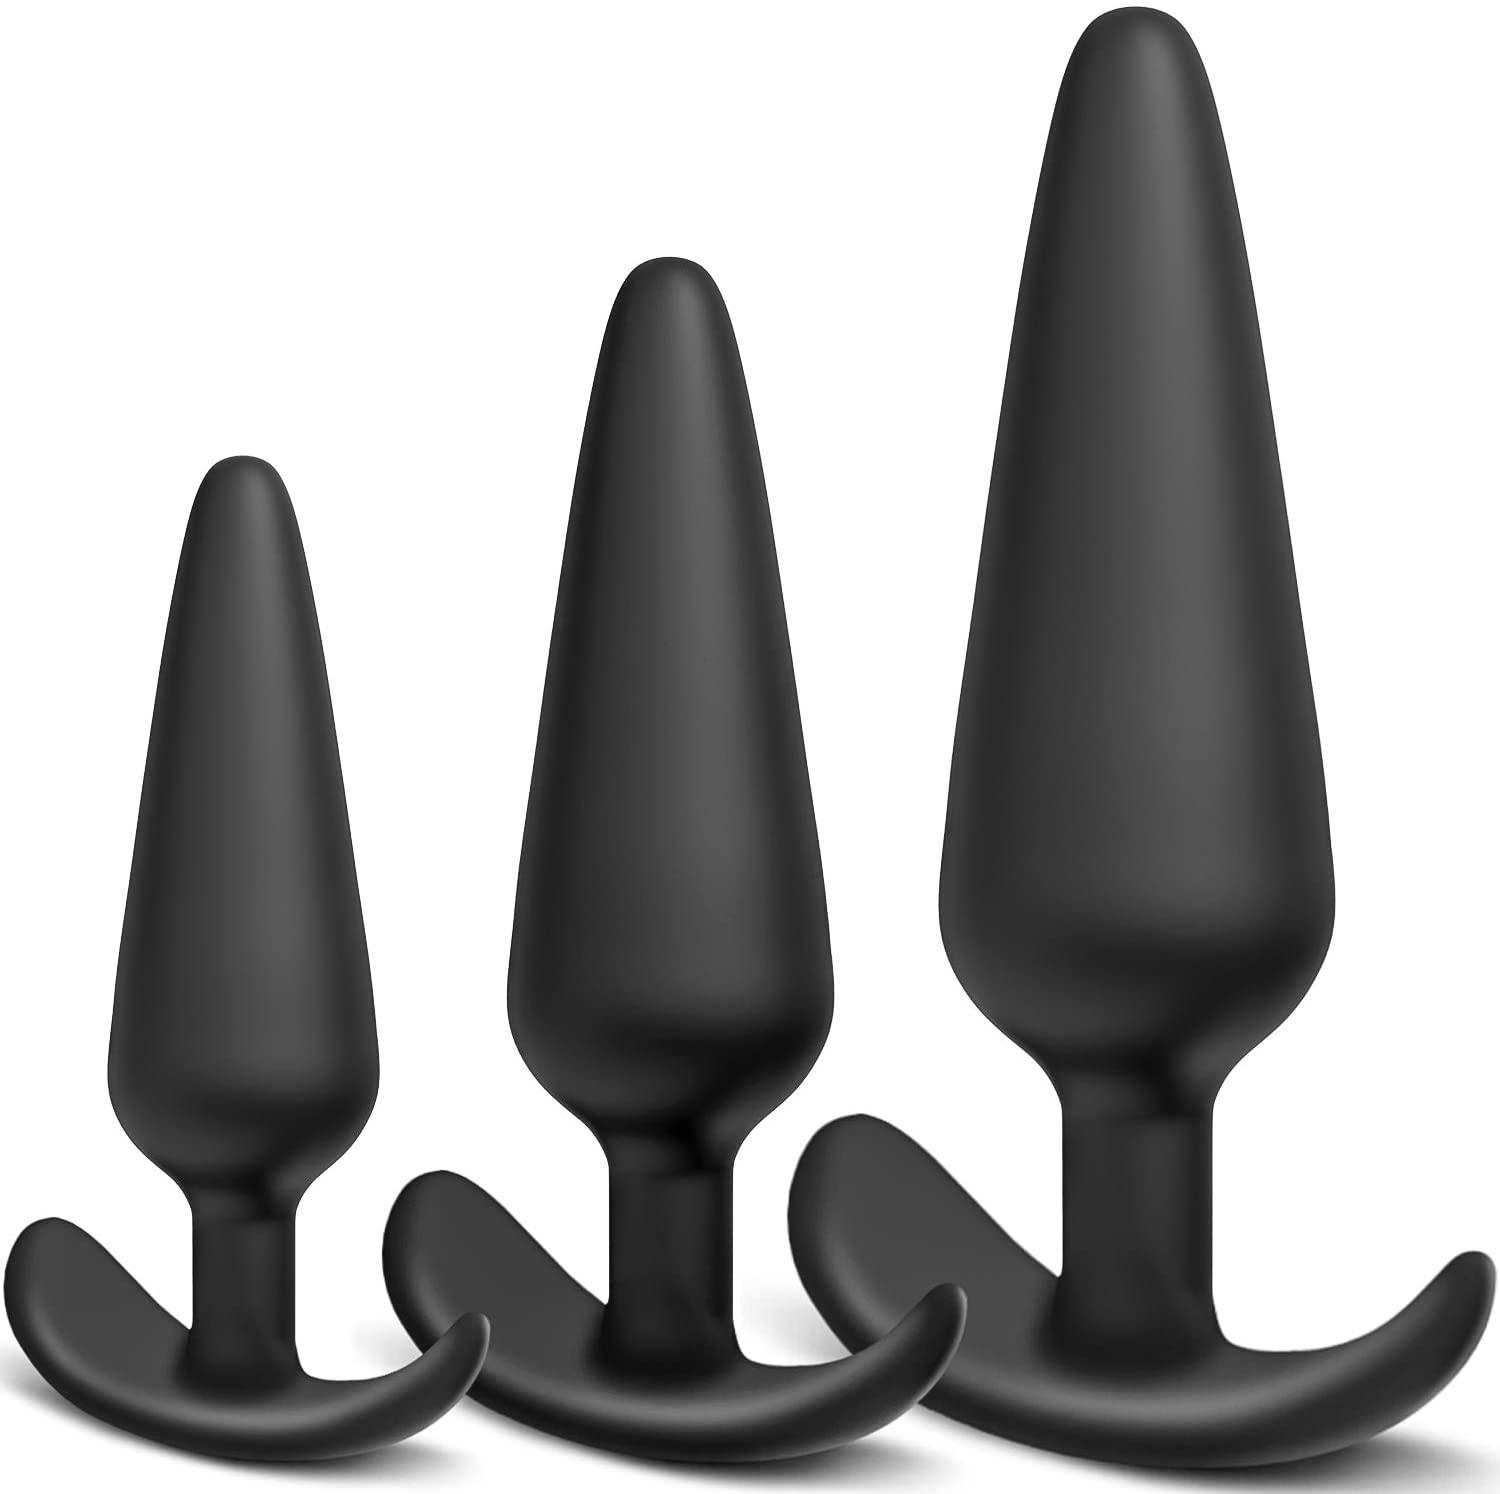 Funejoy Silicone Anal Plug Beginners custom Anal Plug Toy Flared Base Prostate Sex Toys supplier